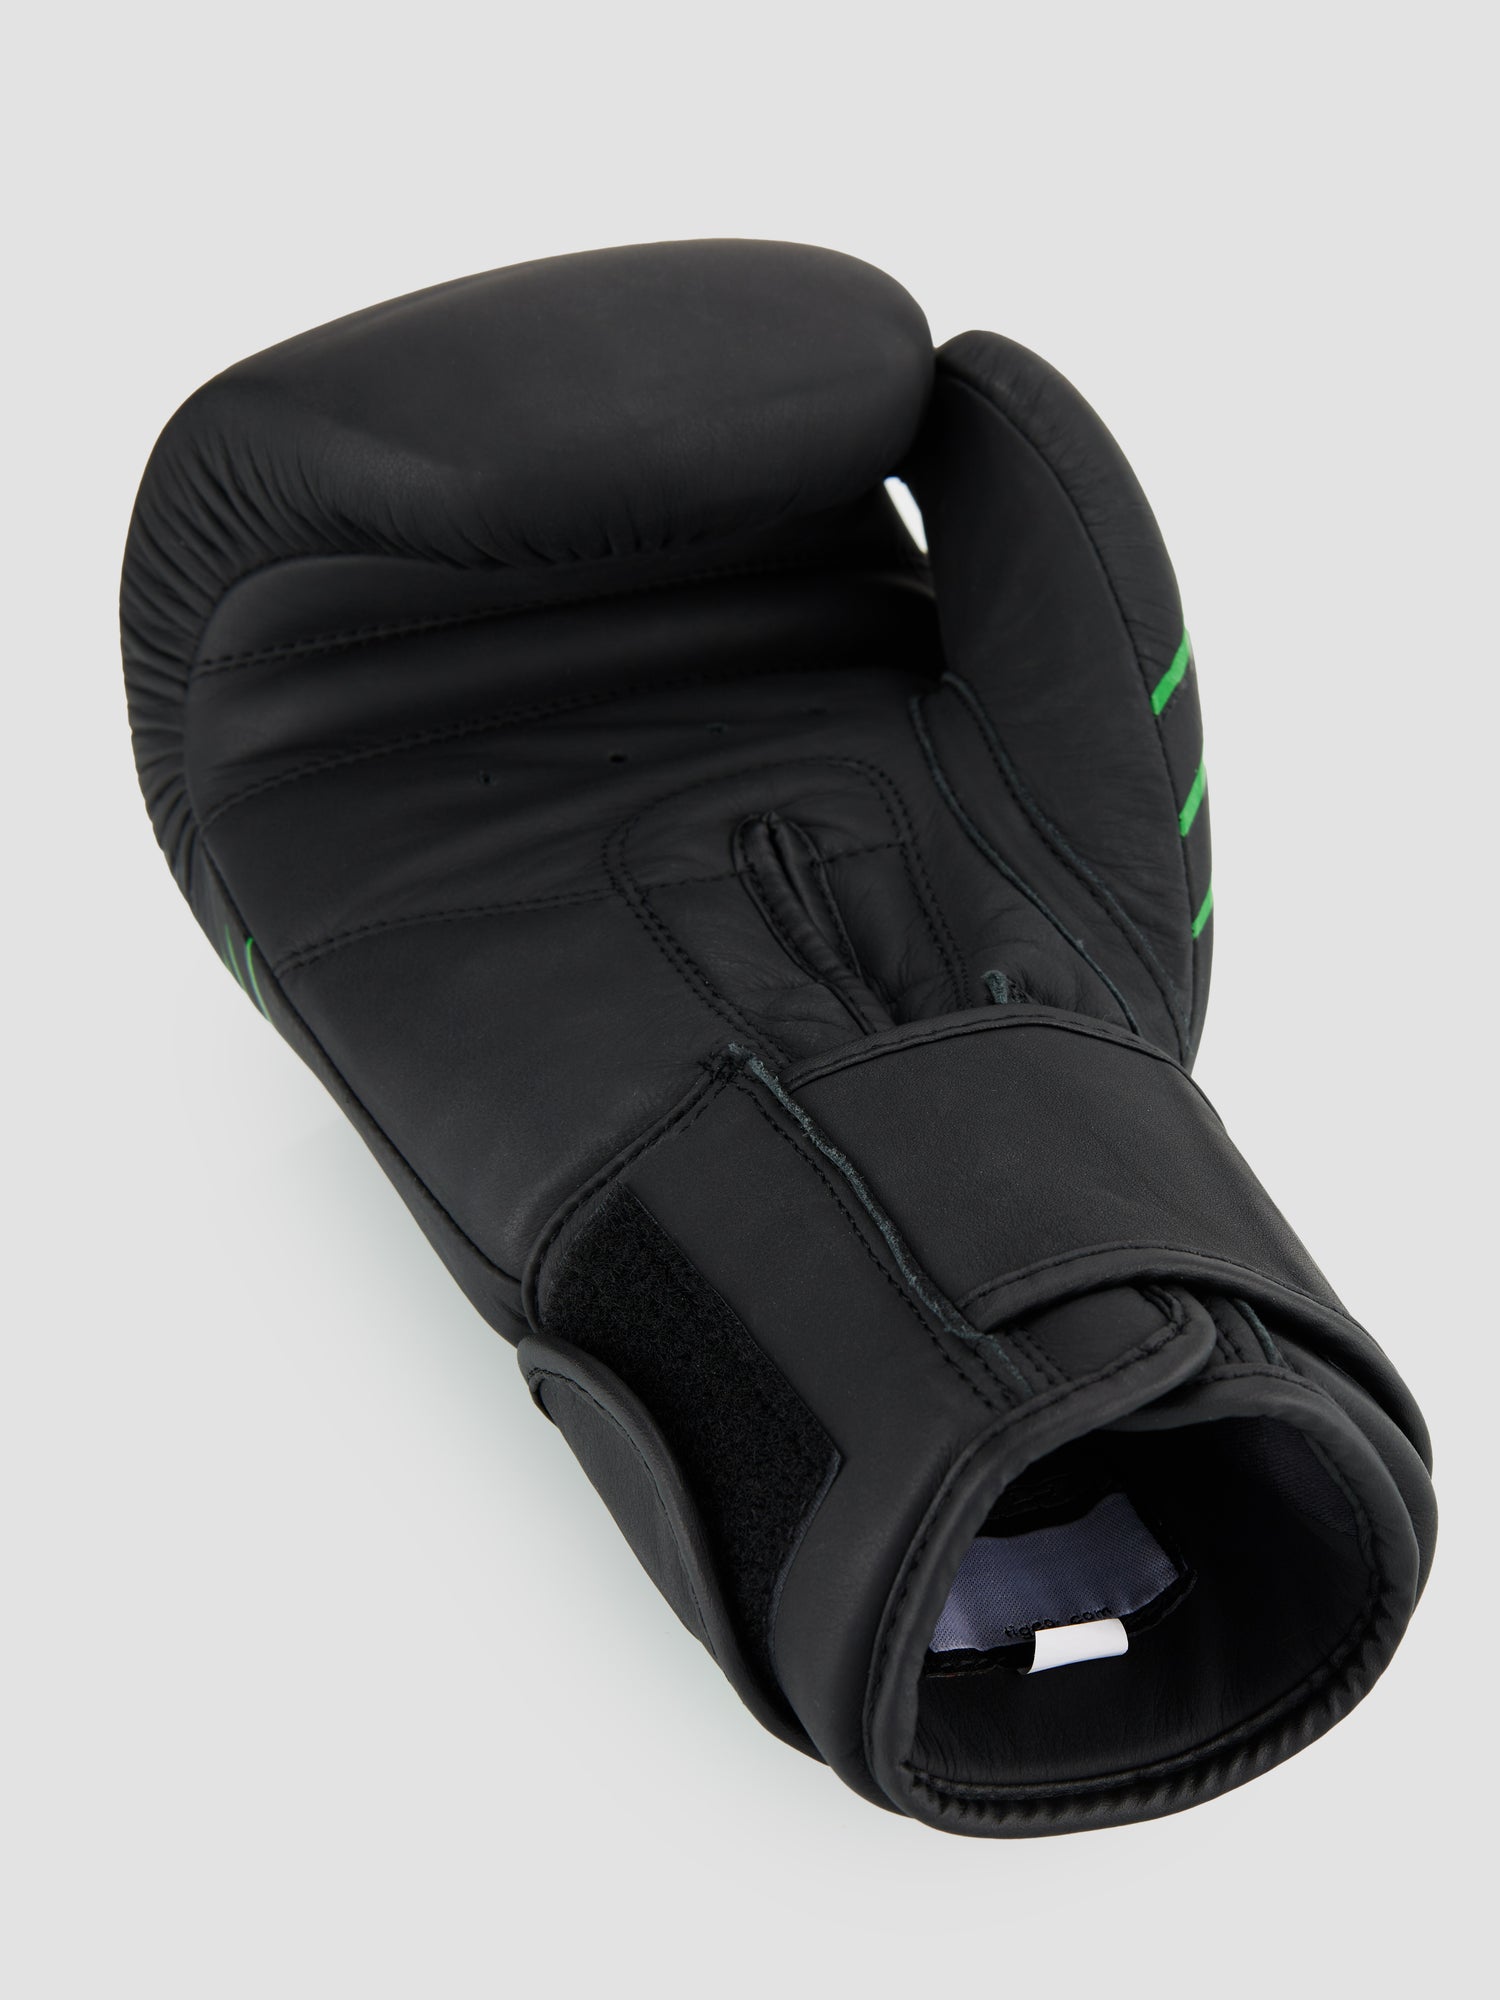 Training/Boxing Gloves Surge